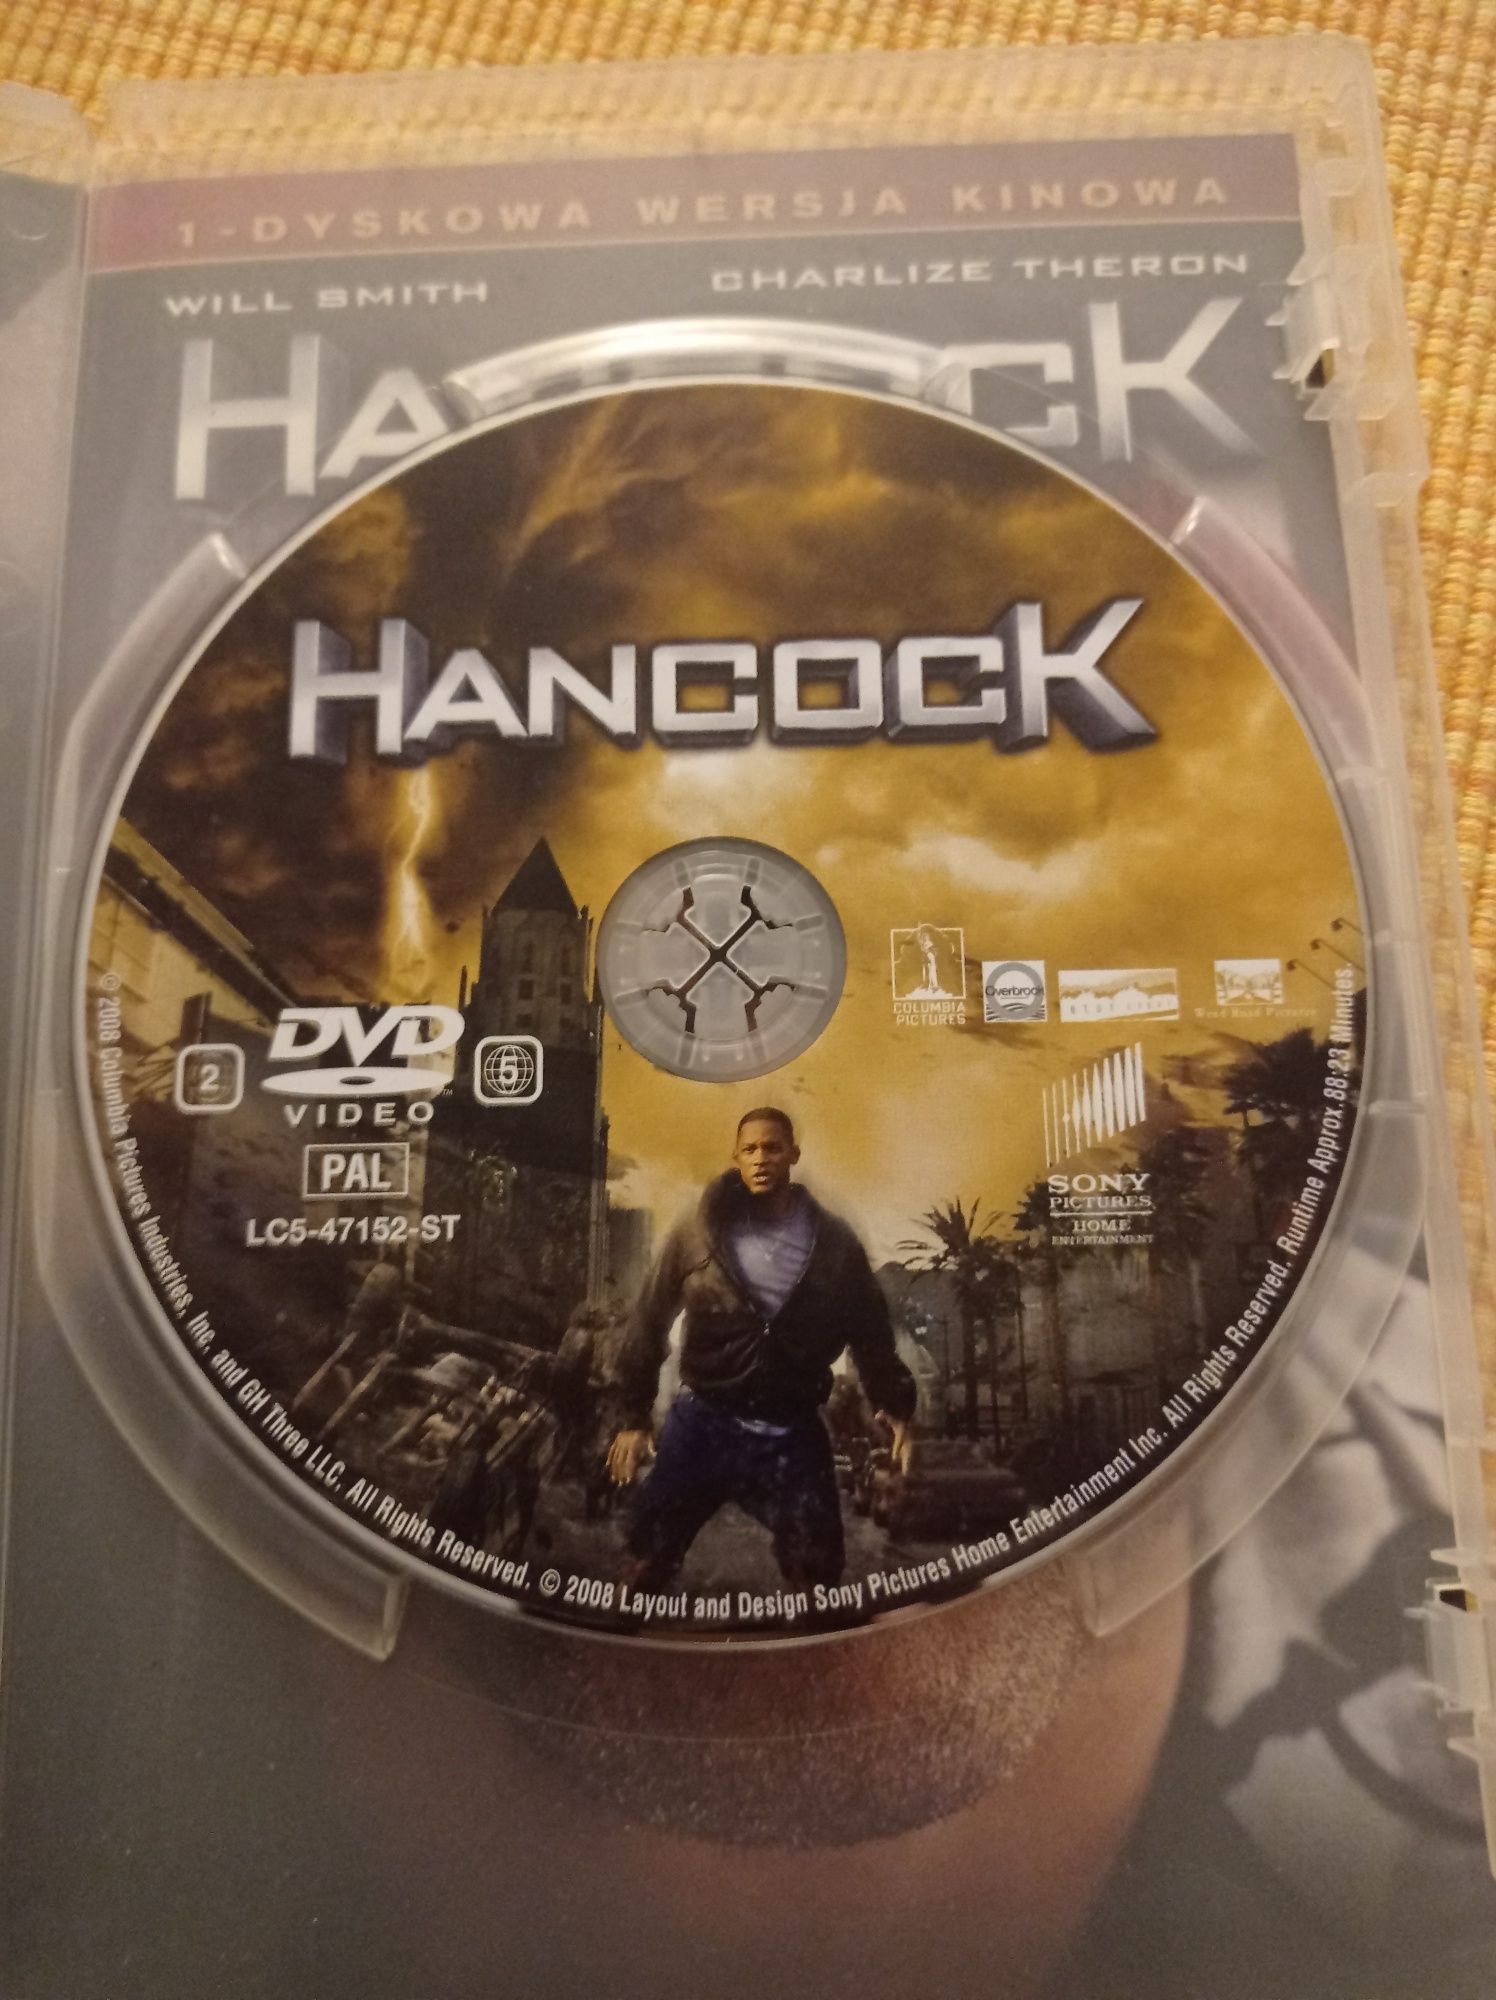 Hancock - DVD film